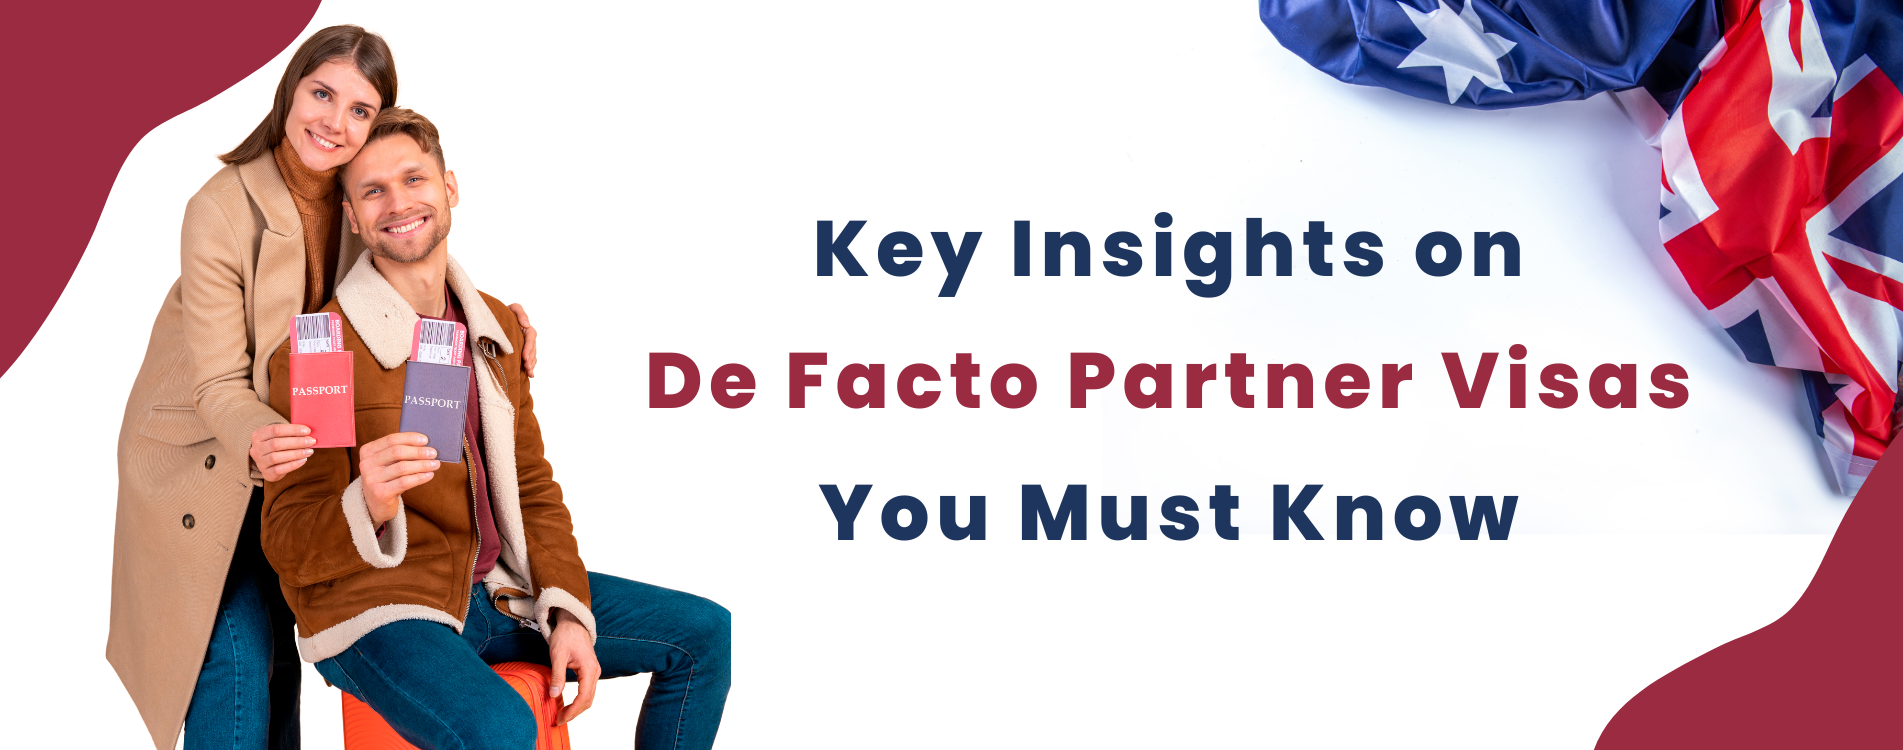 Key Insights on De Facto Partner Visas You Must Know